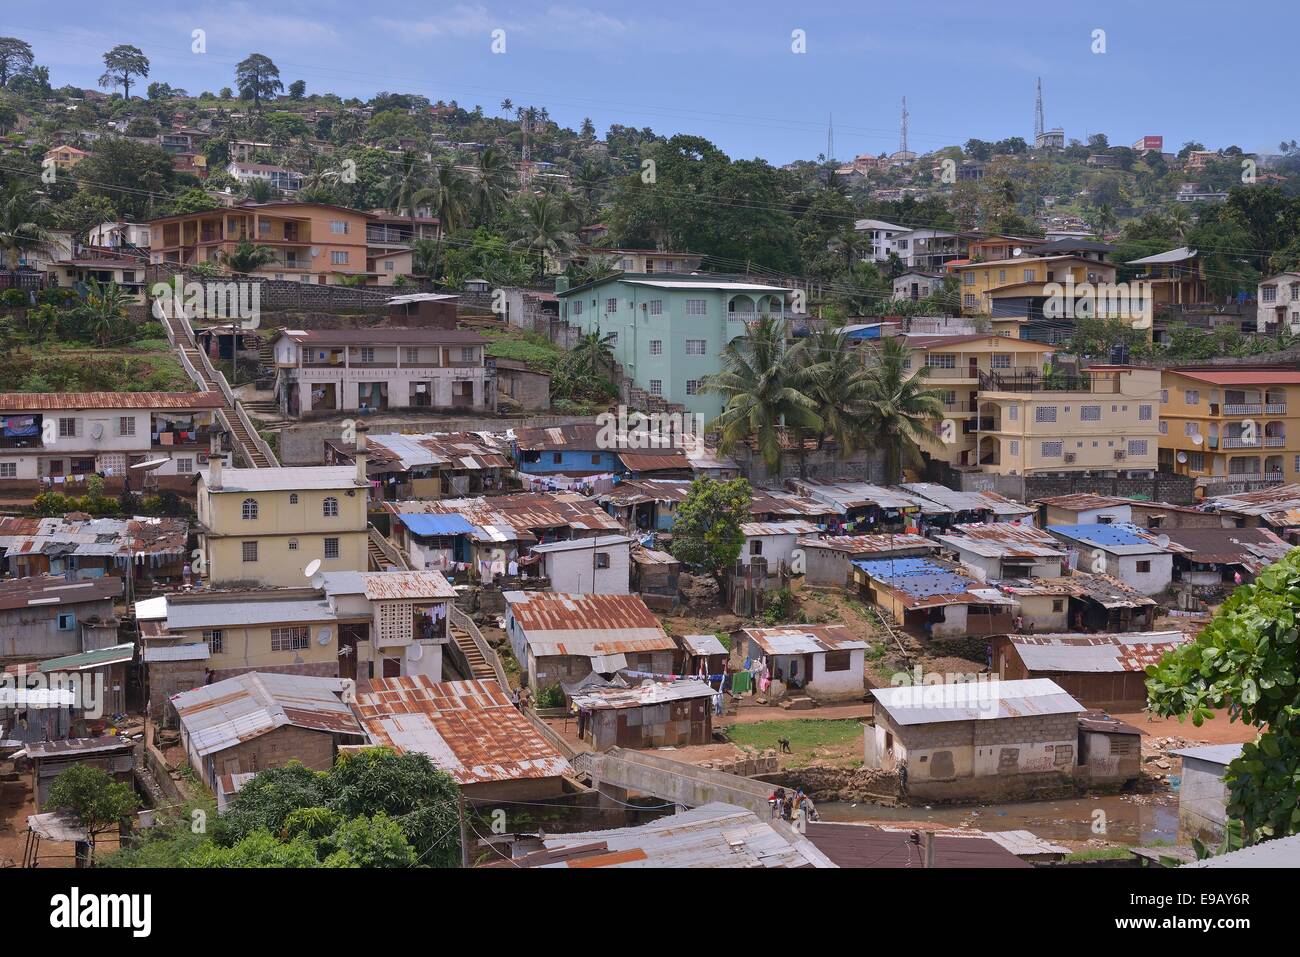 Slums of Freetown, Sierra Leone Stock Photo